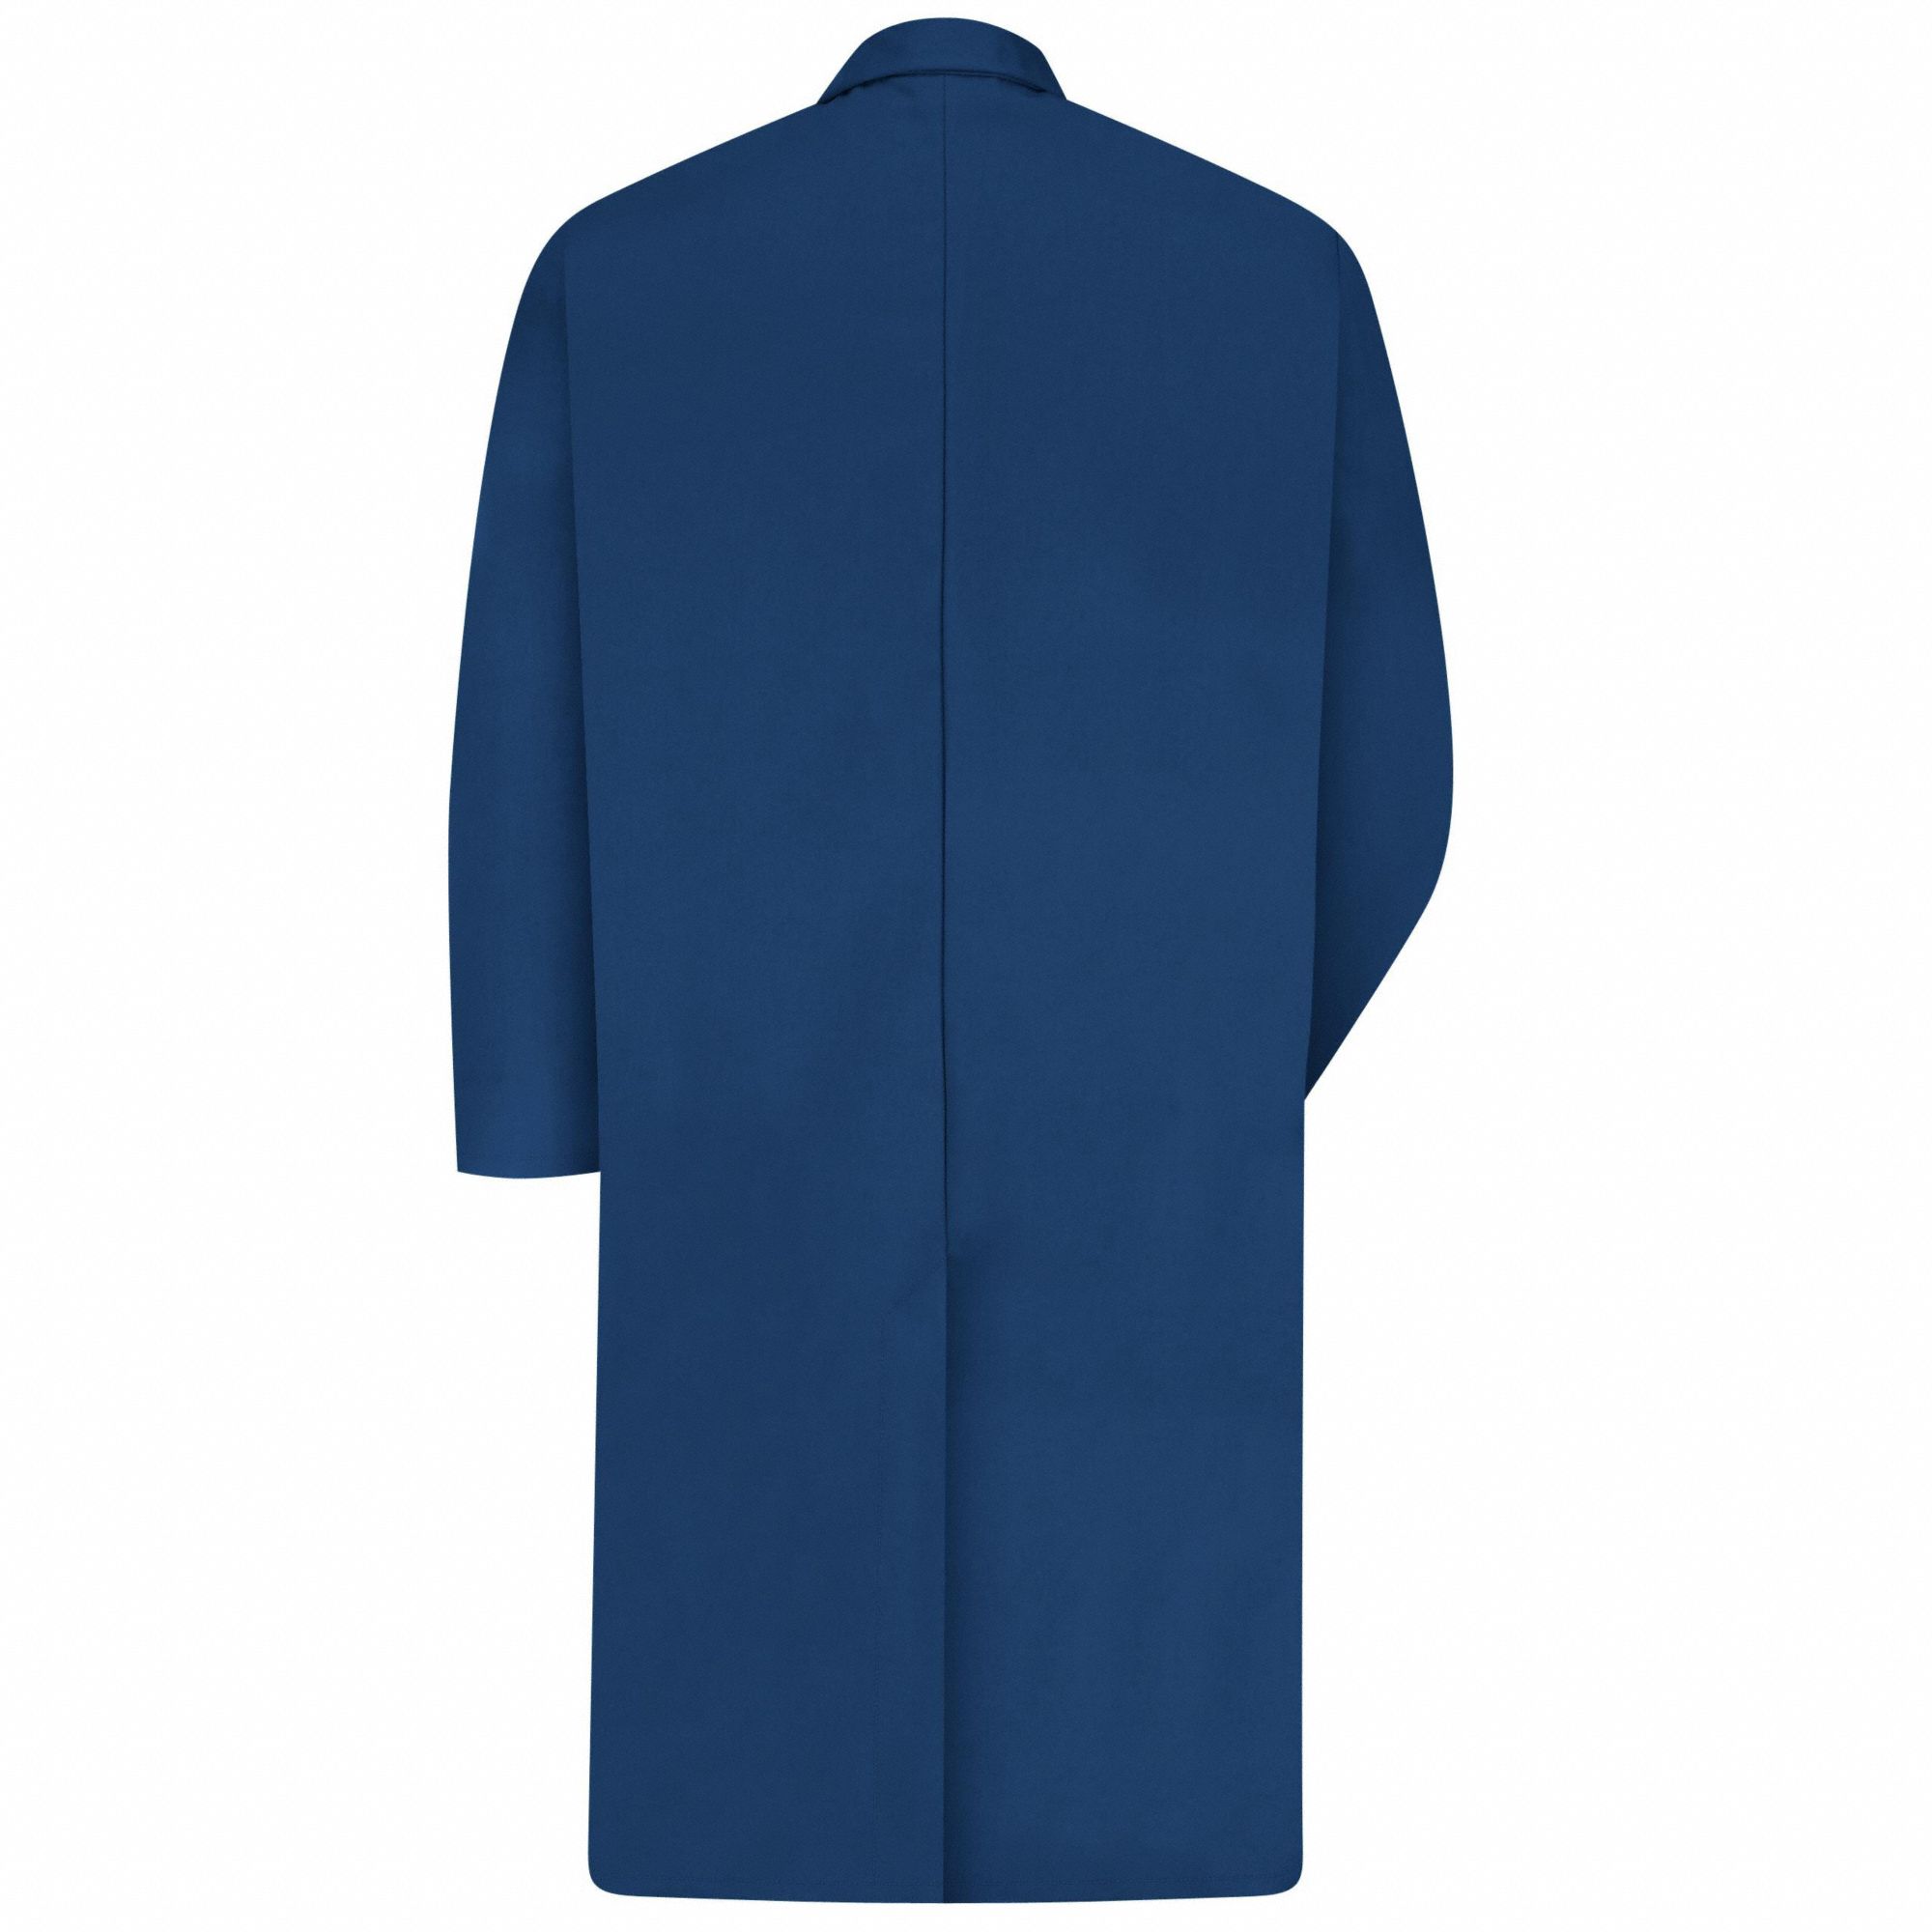 VF WORKWEAR Shop Coat: Coat, Unisex, Jacket Garment, L, Navy, Regular ...